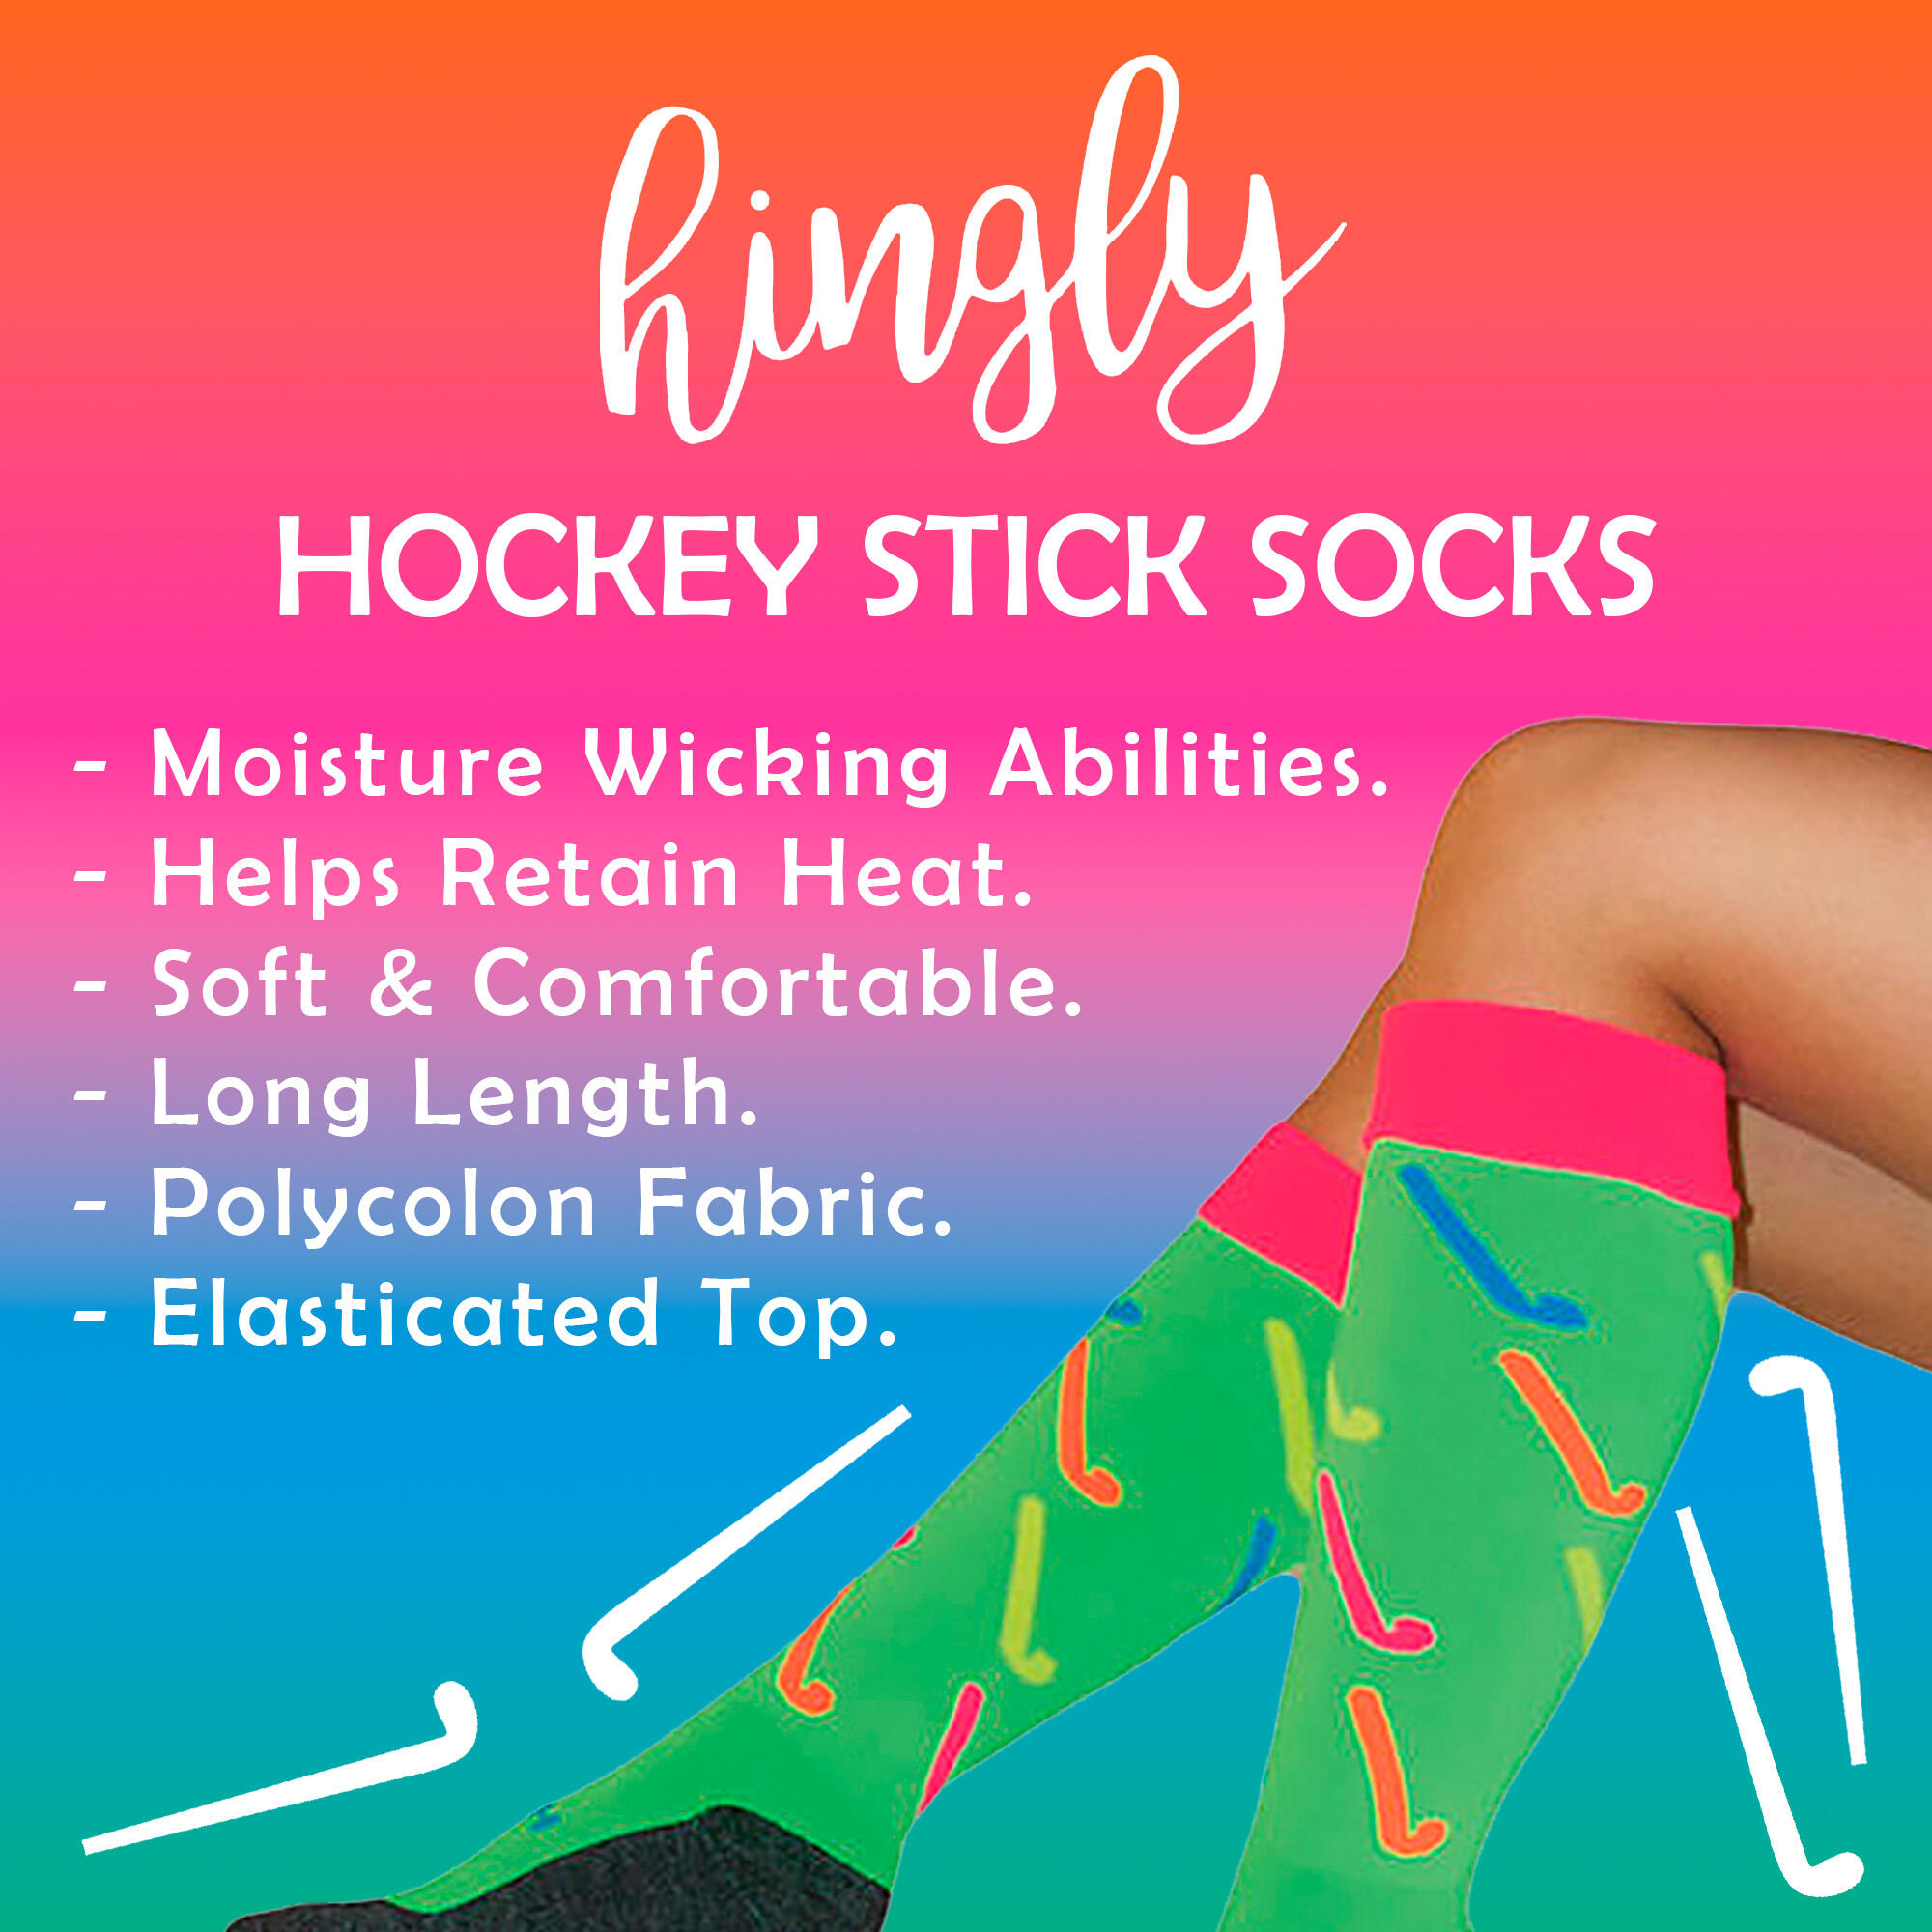 Knee High Hockey Socks with Hockey Stick Designs | Kids Sizes 4/4